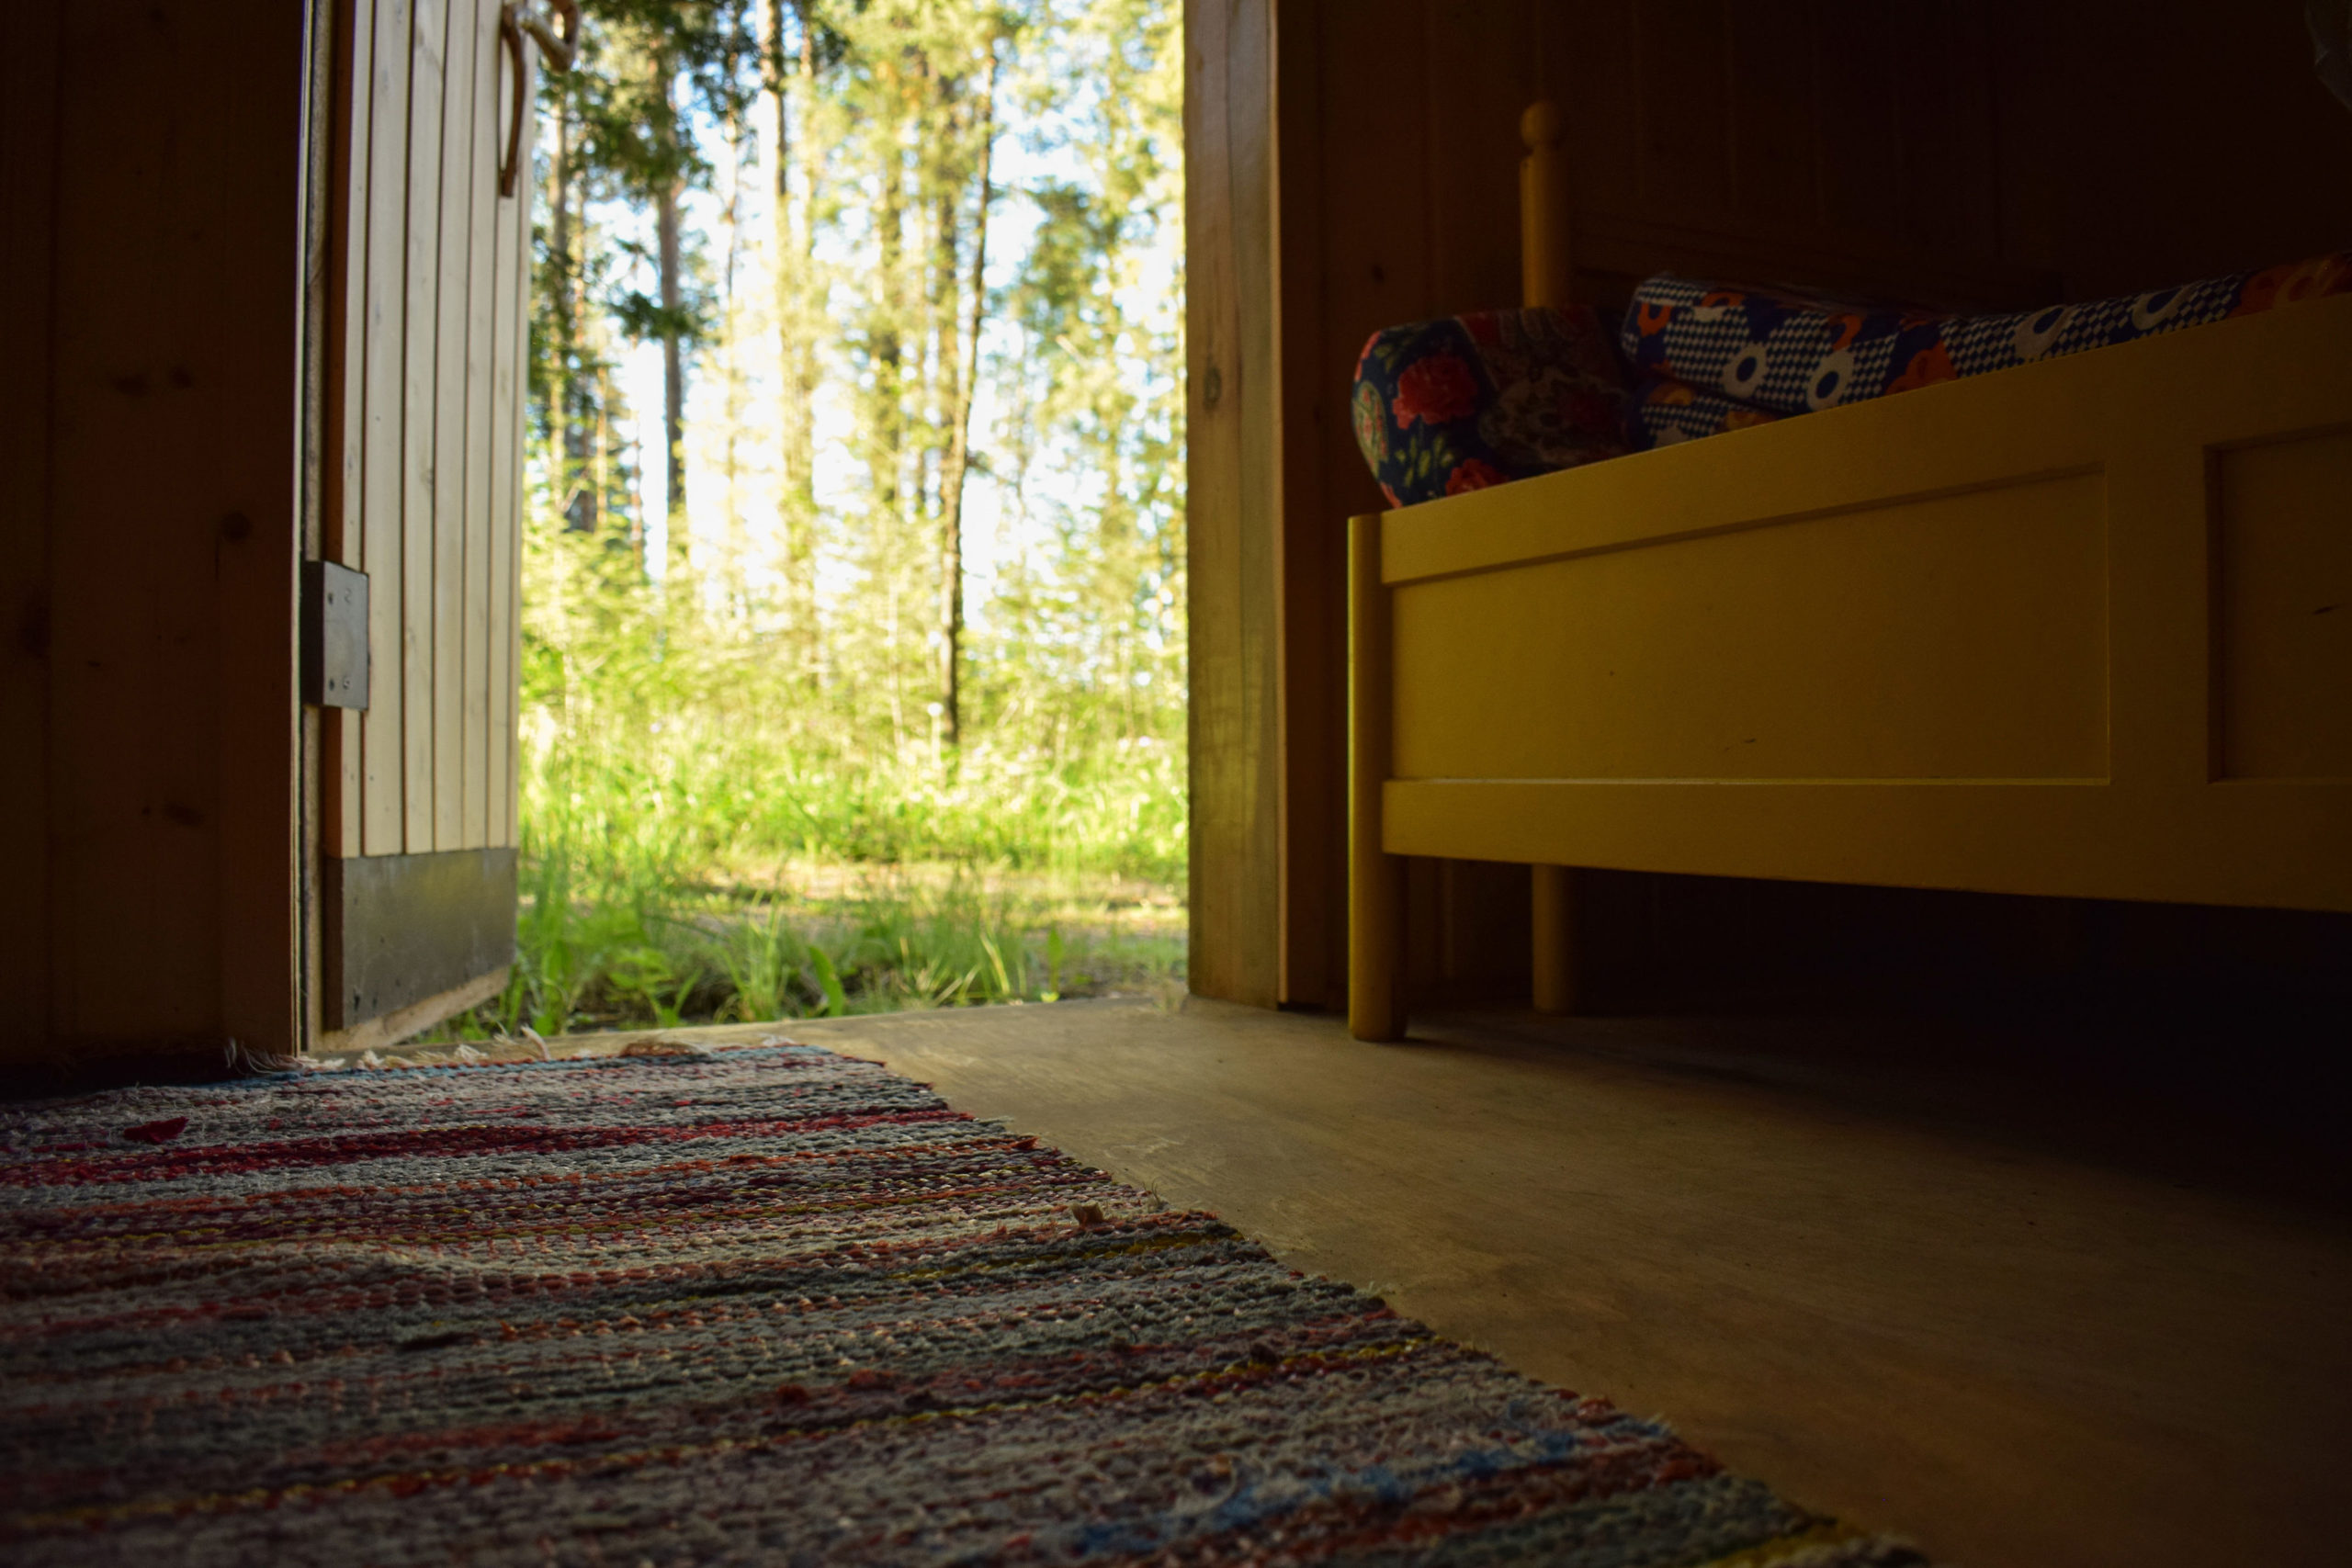 Traditional Finnish summer cottage atmosphere at Kukkoniemen Lomamökit rental cottages in Punkaharju, Saimaa